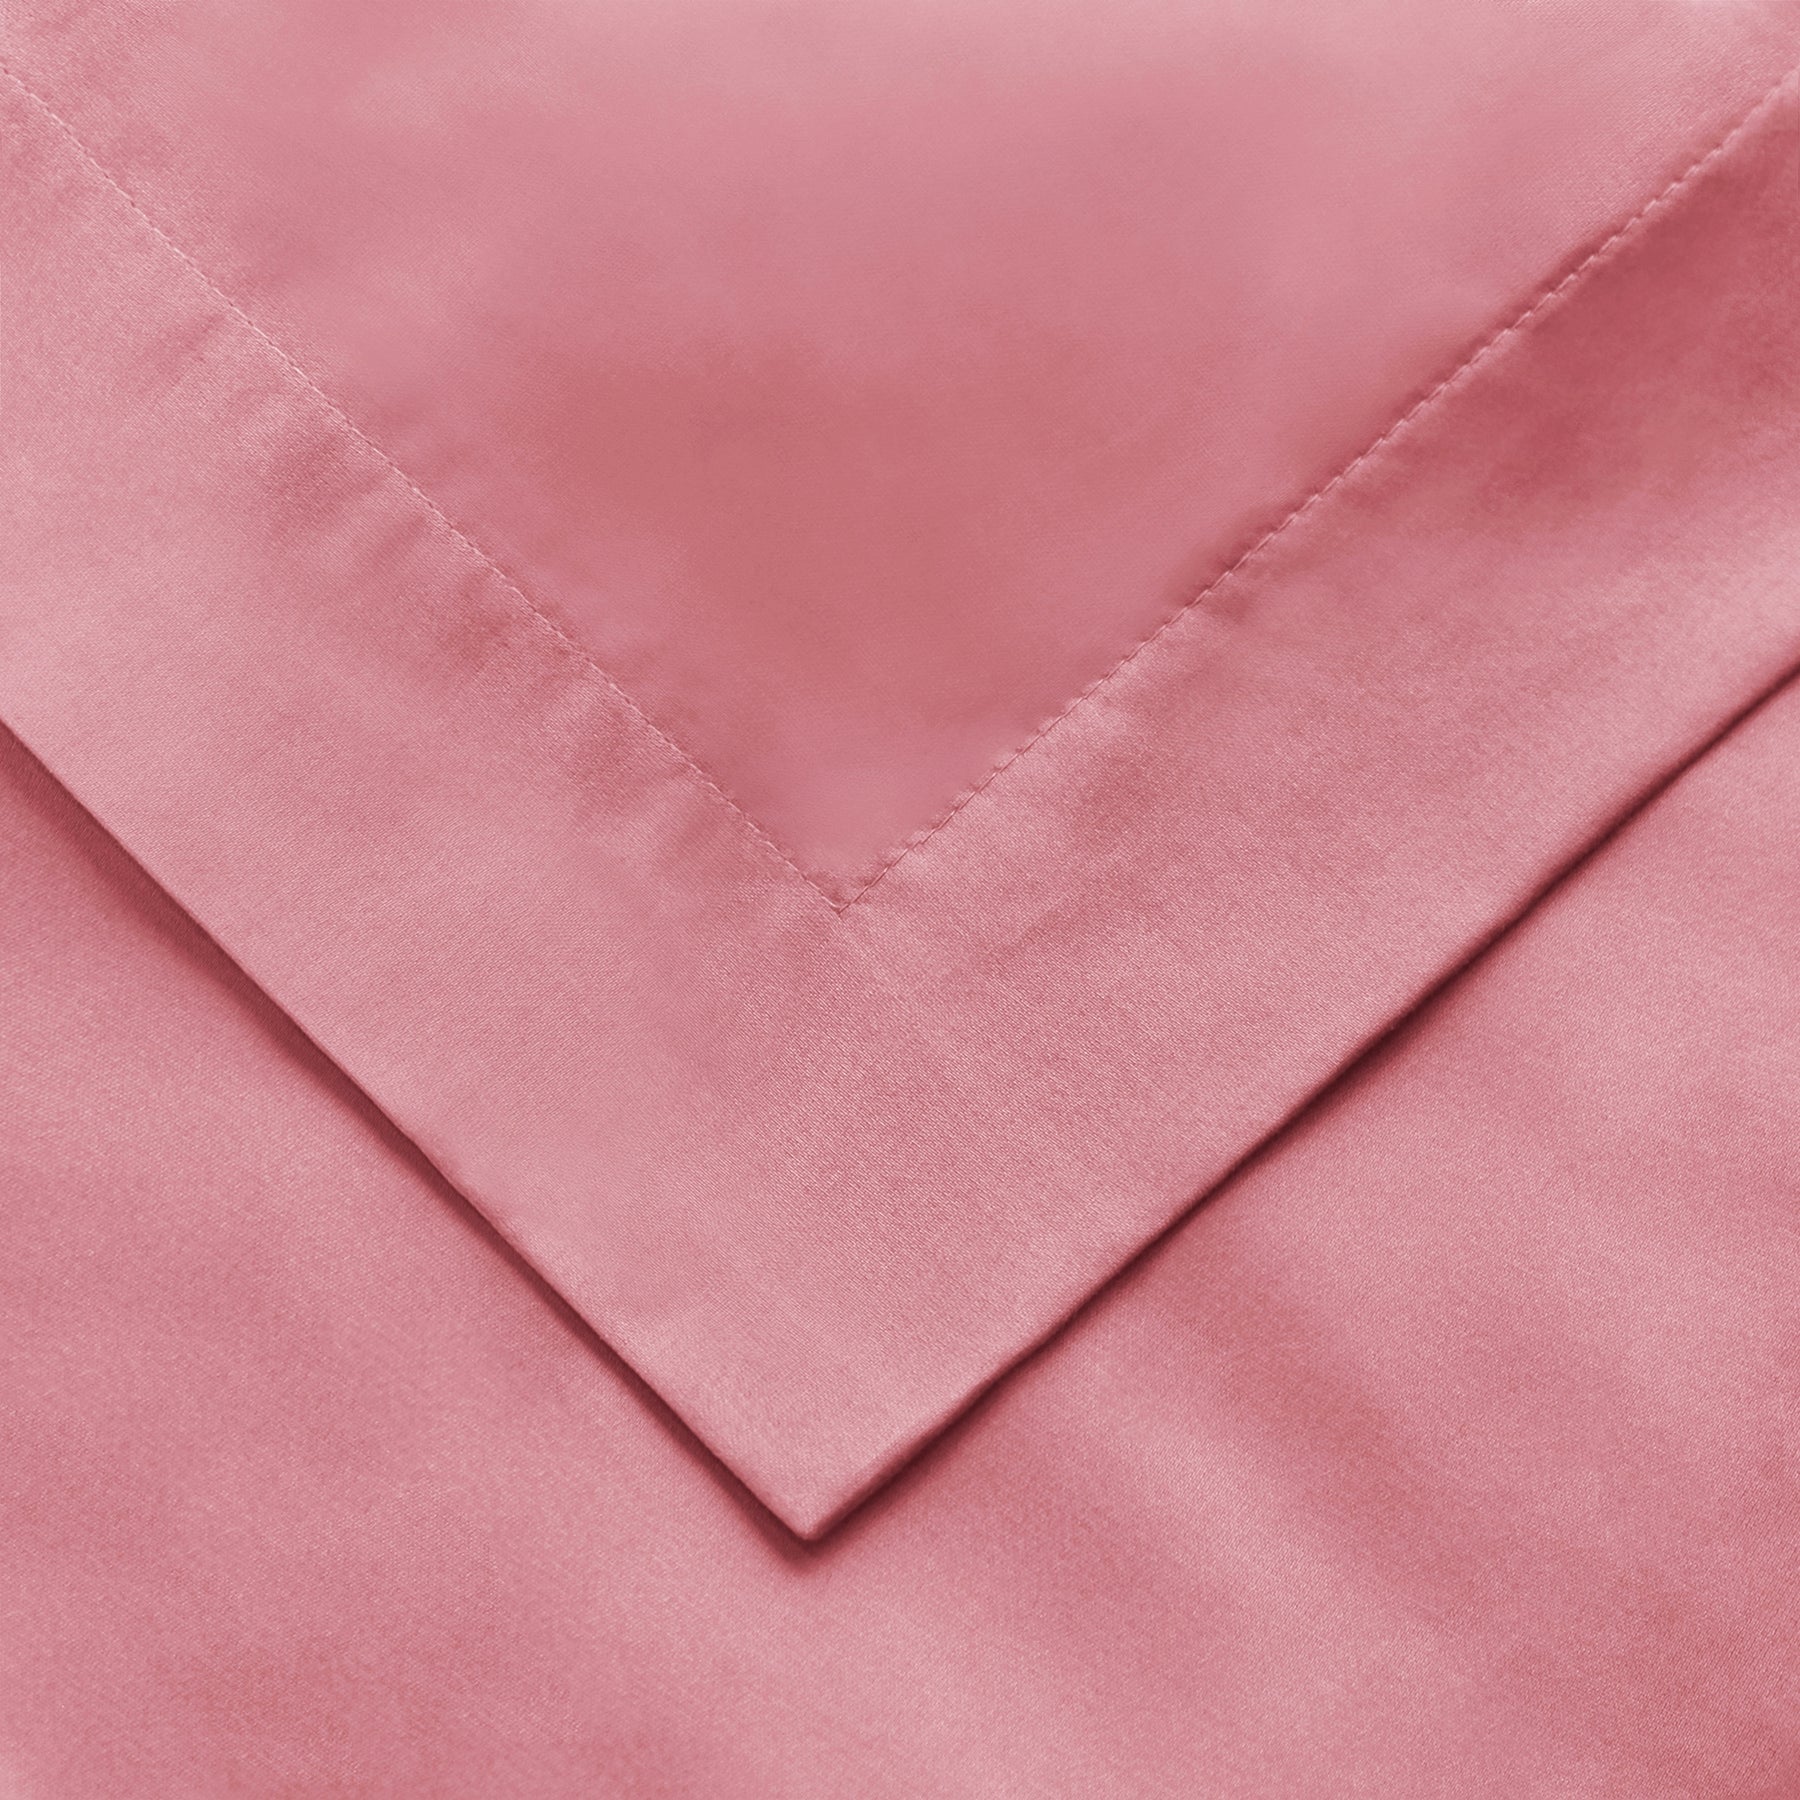 Superior Premium 650 Thread Count Egyptian Cotton Solid Duvet Cover Set - Blush